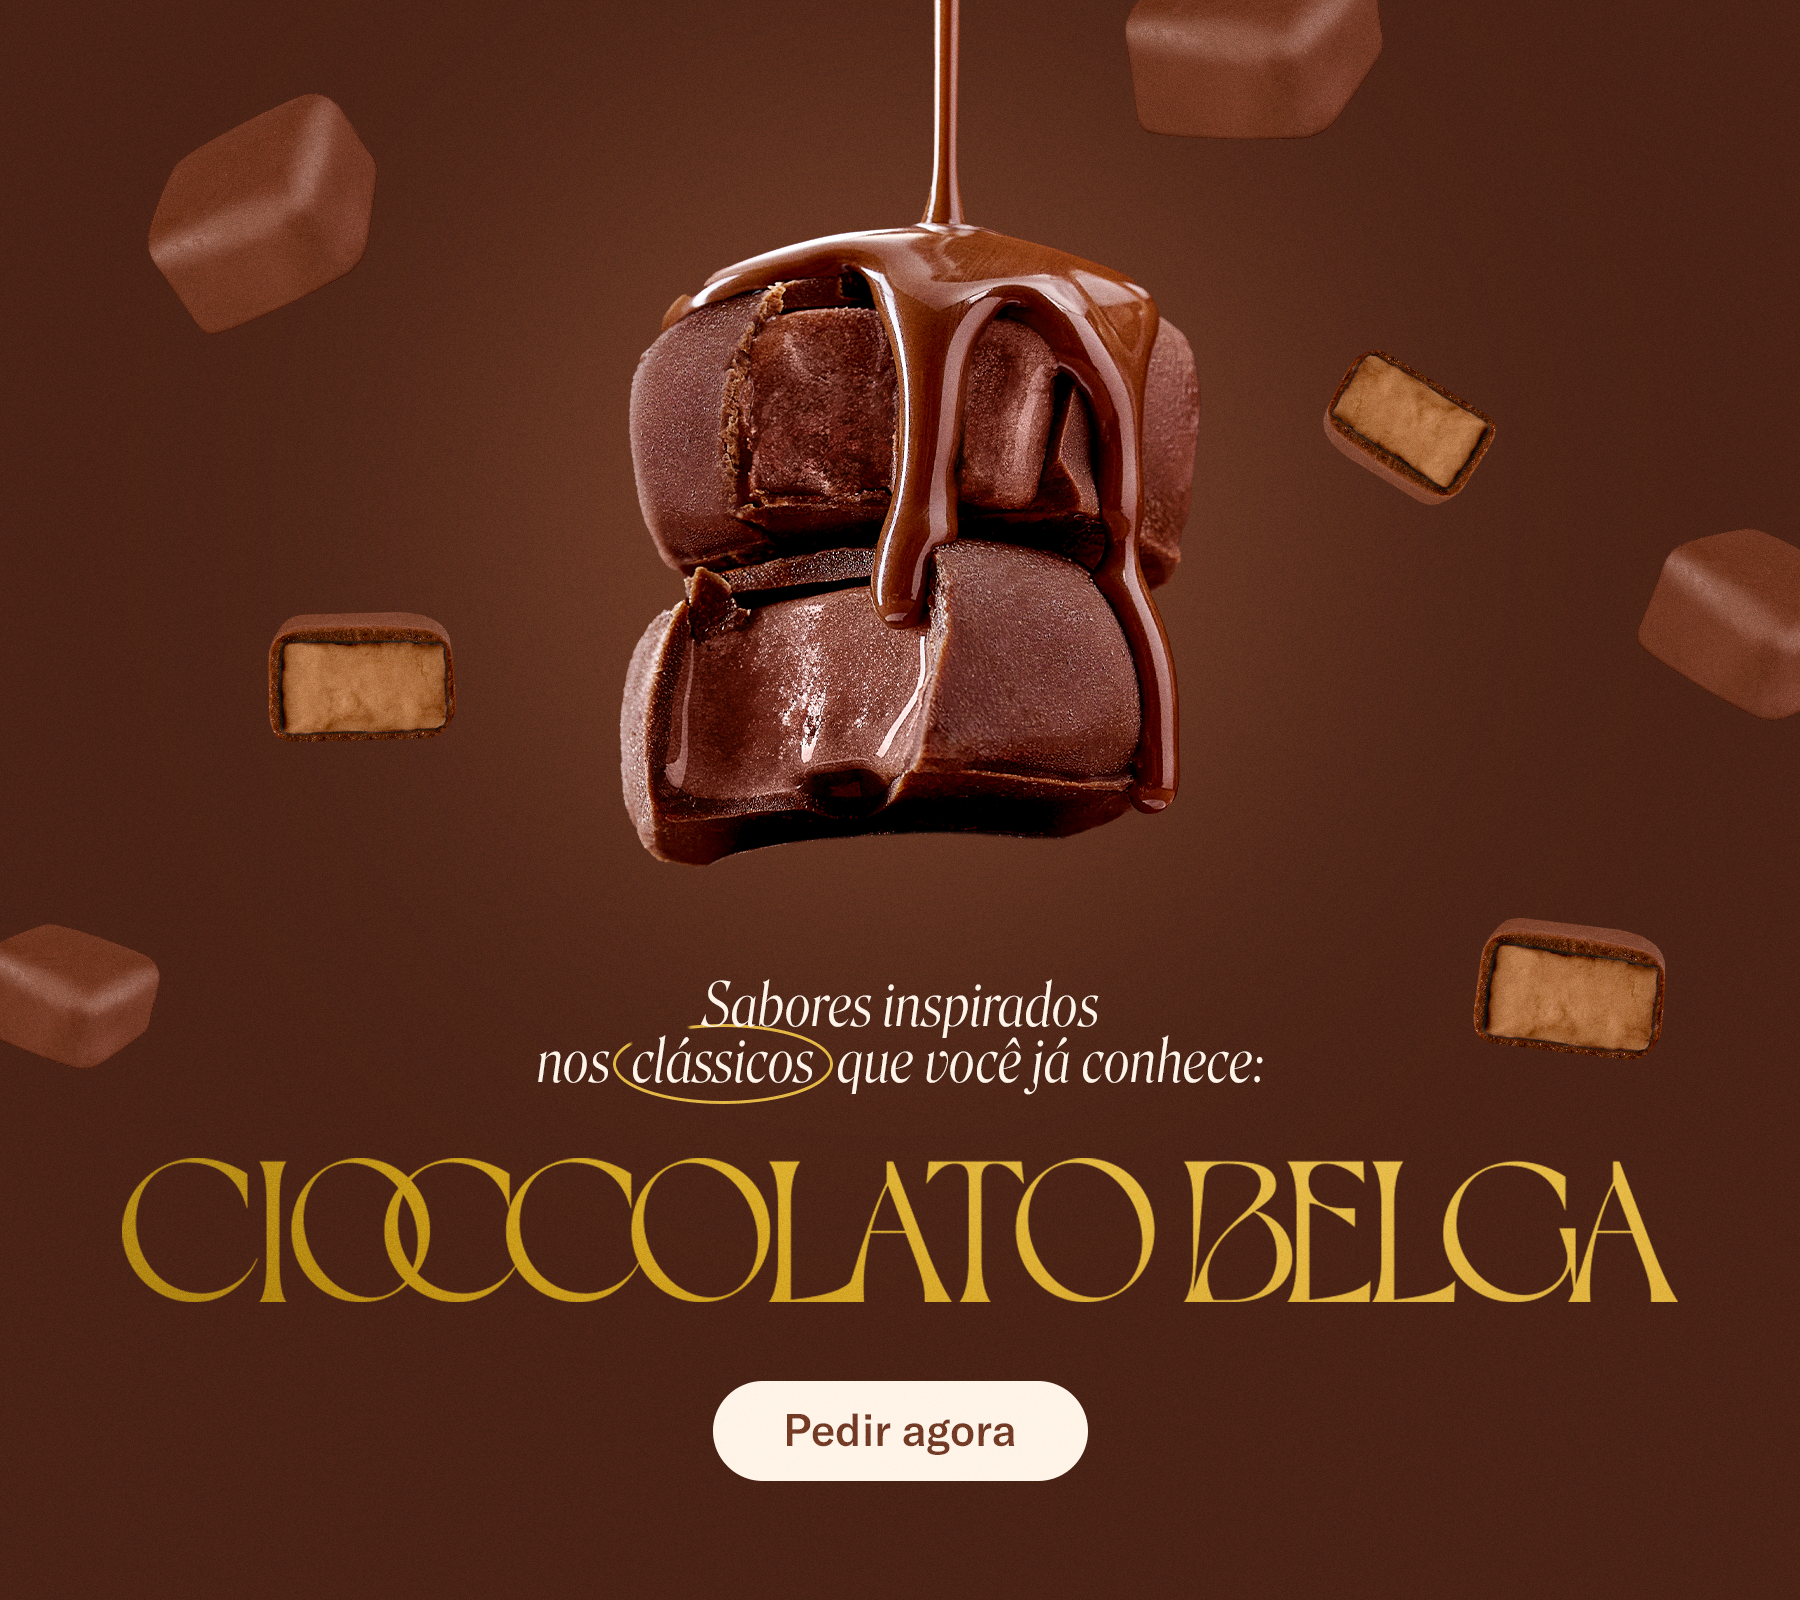 Sabor Cioccolato Belga